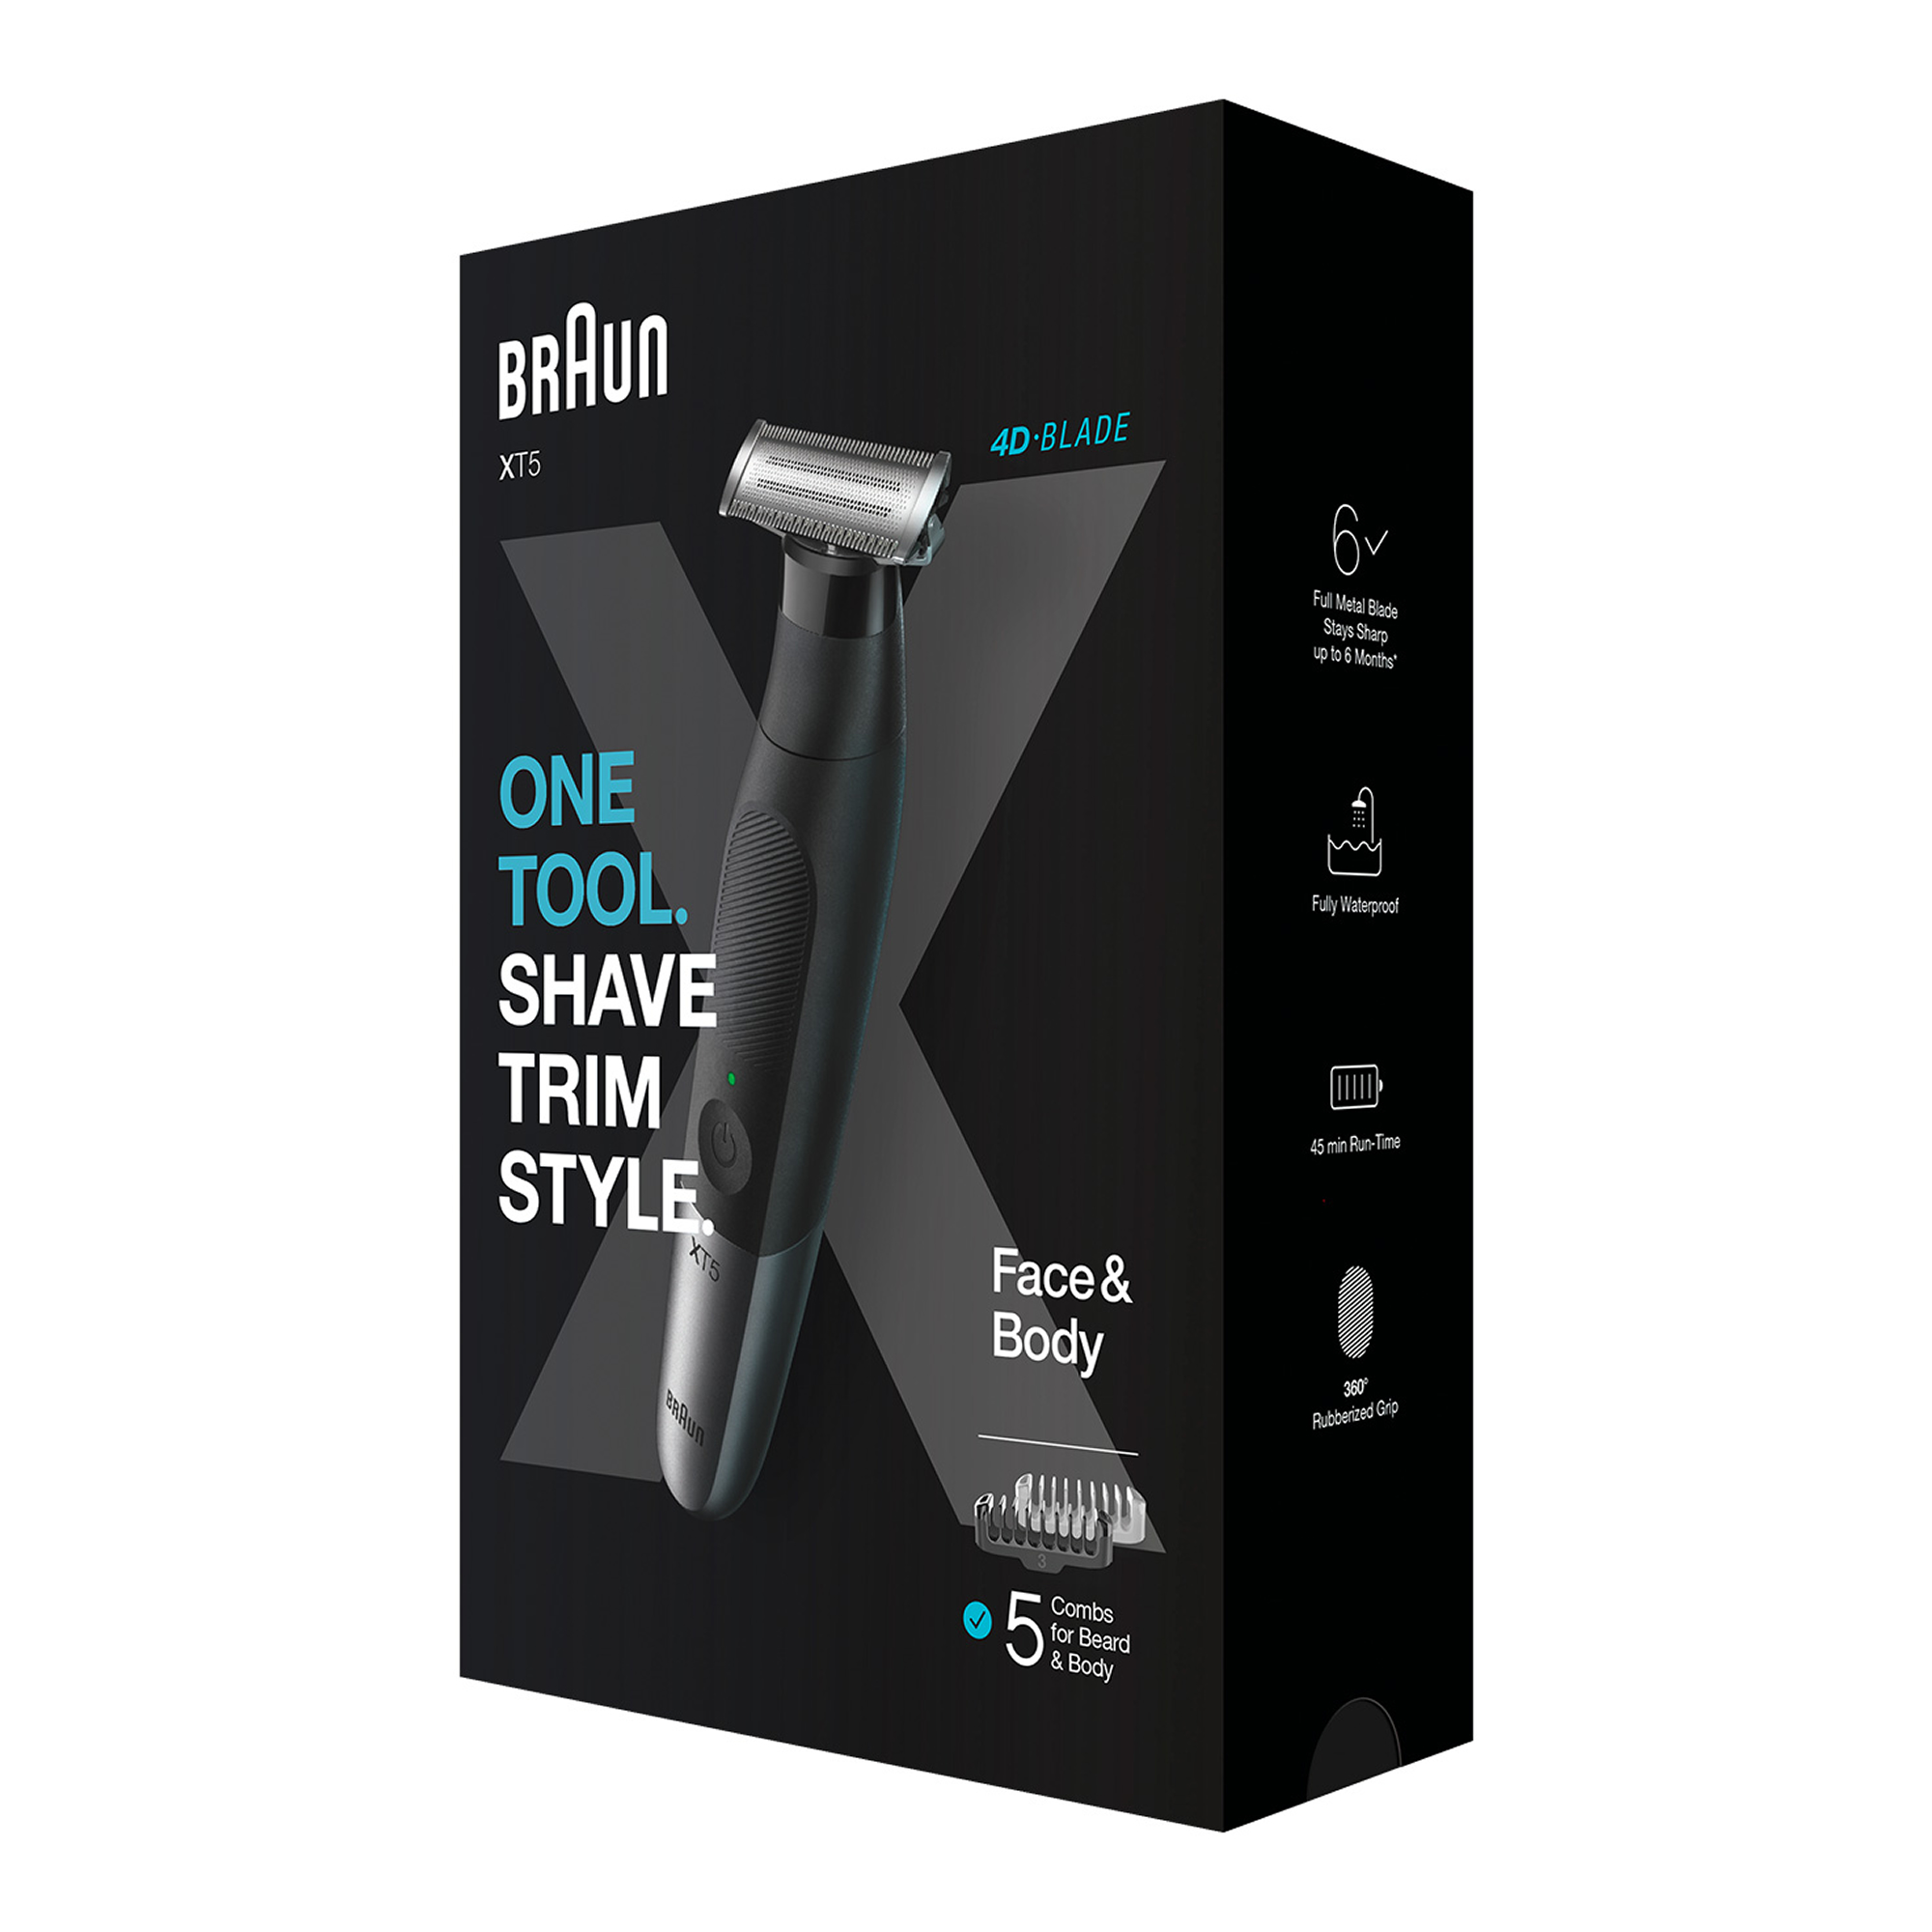 Trimer Braun XT5100 style shave